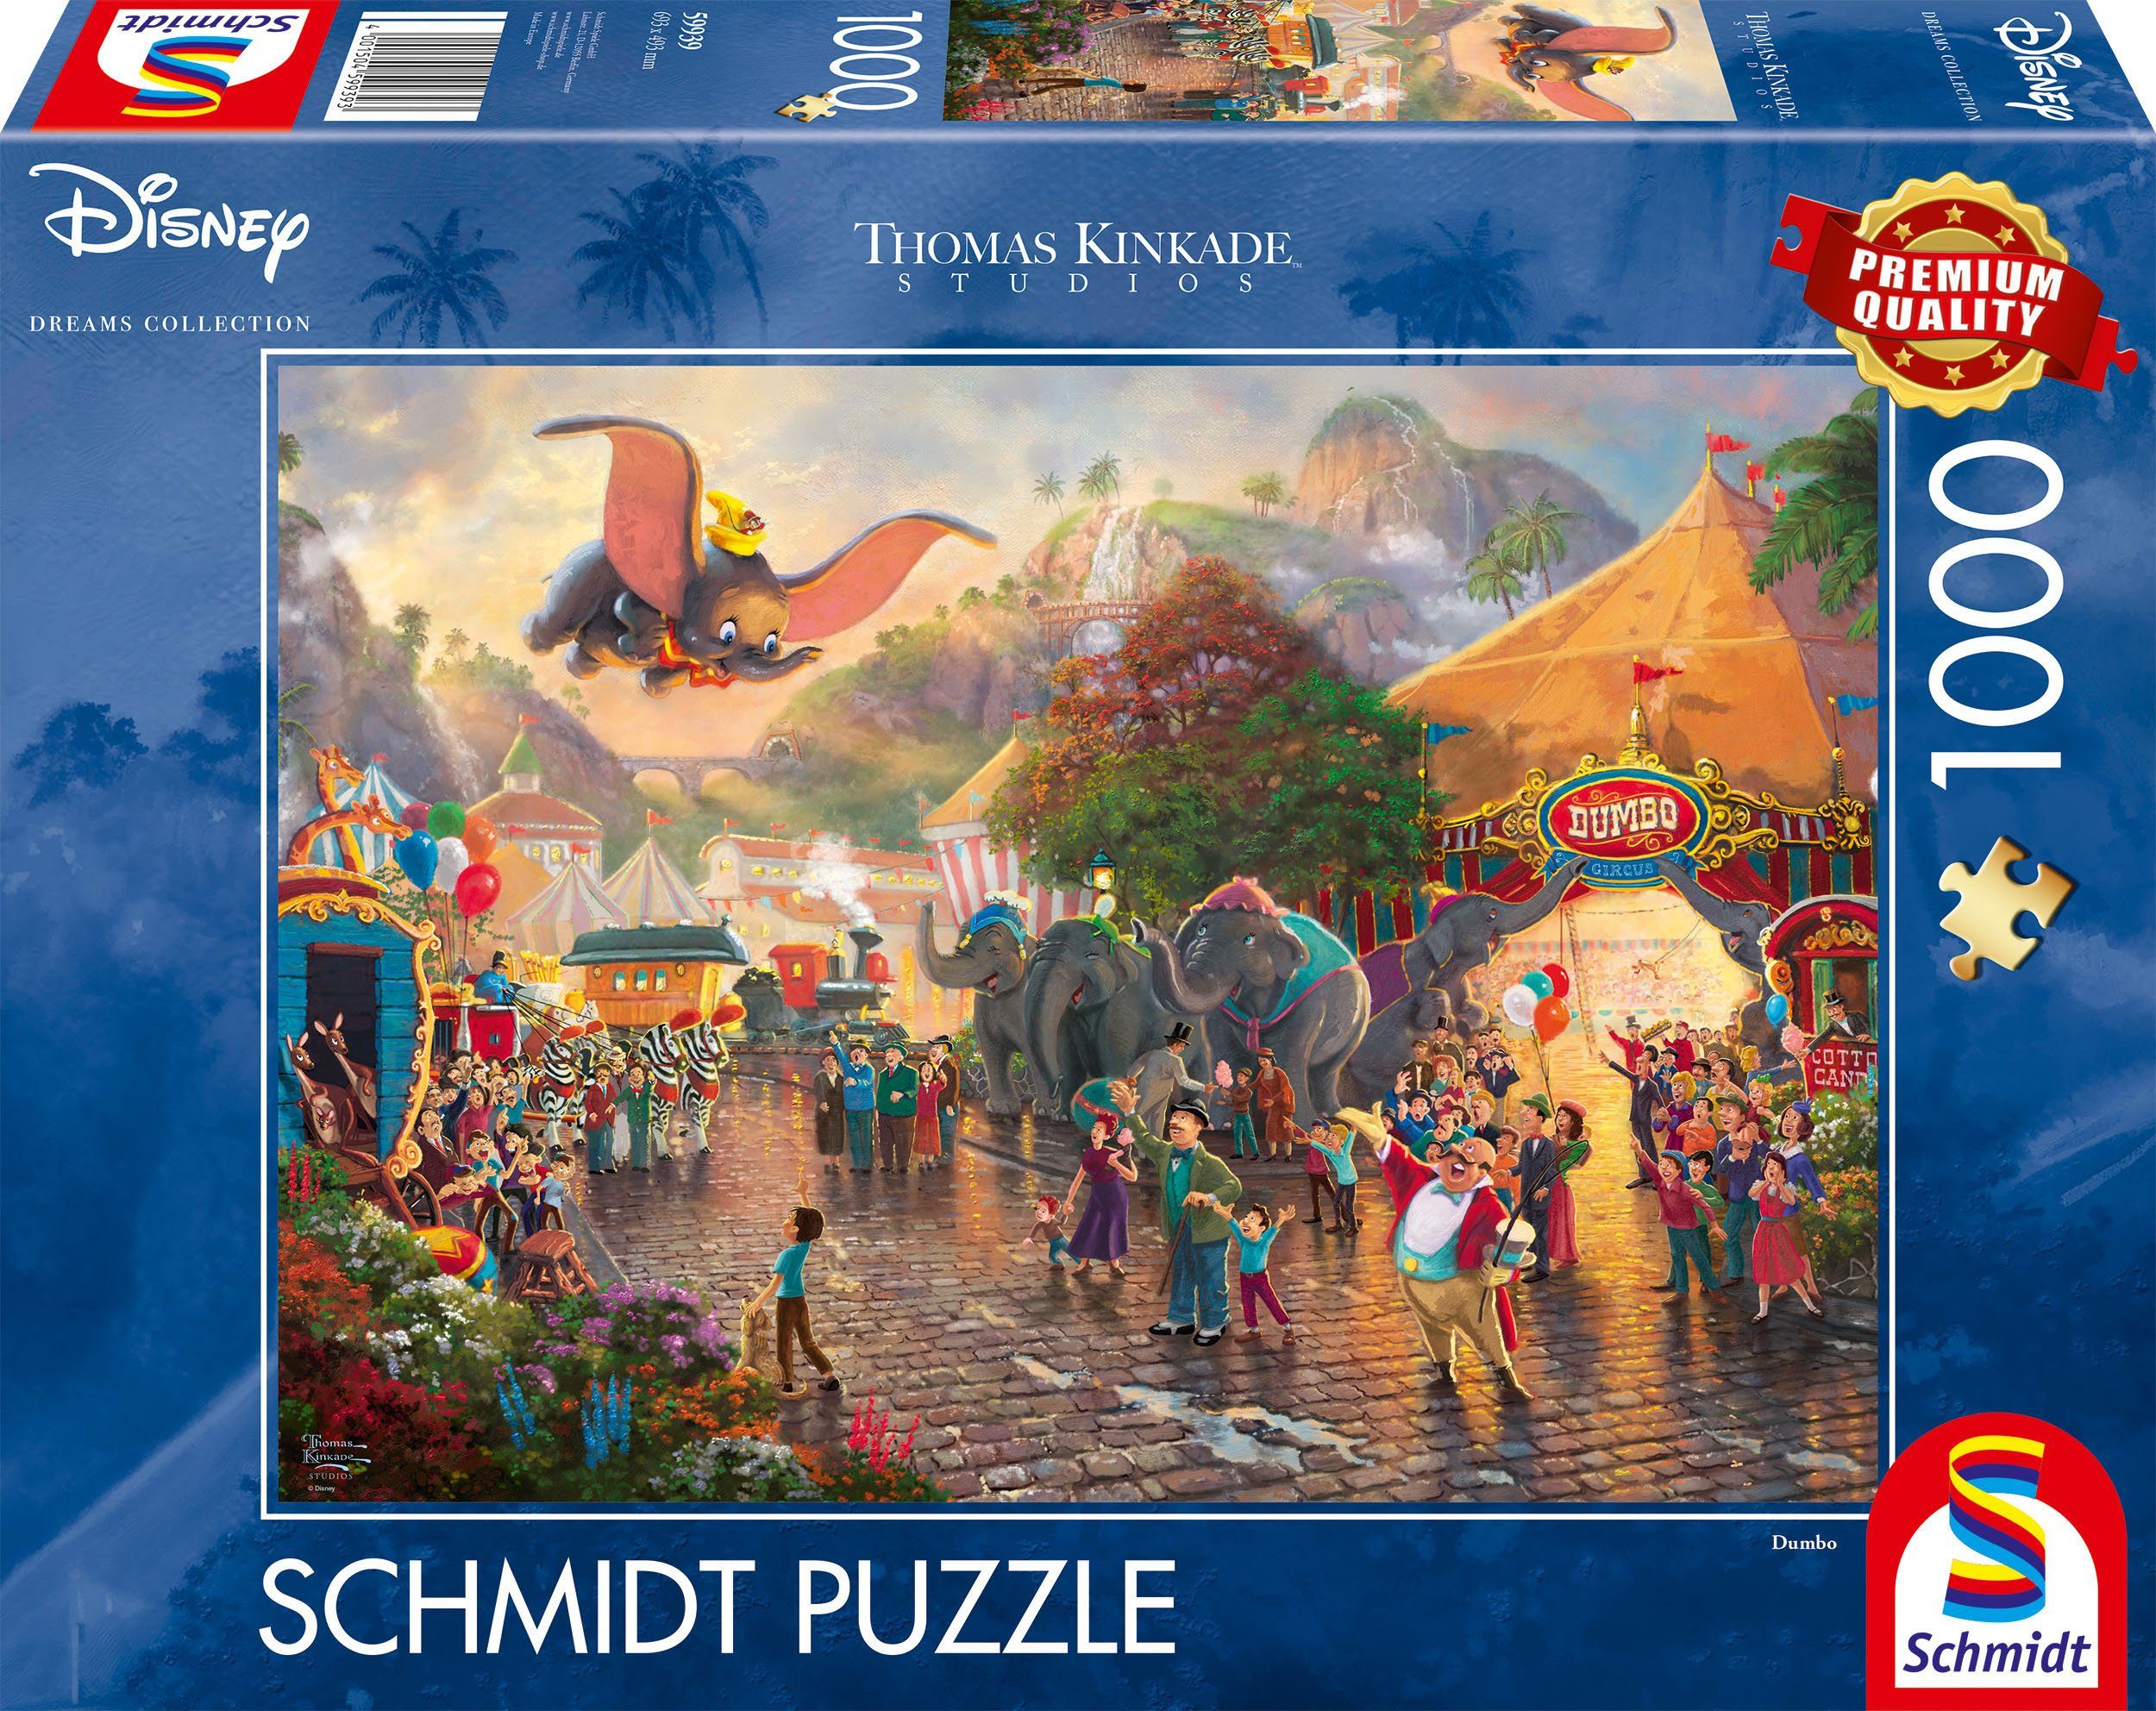 Schmidt Spiele Puzzle Disney, Dumbo, 1000 Puzzleteile, Thomas Kinkade; Made in Europe